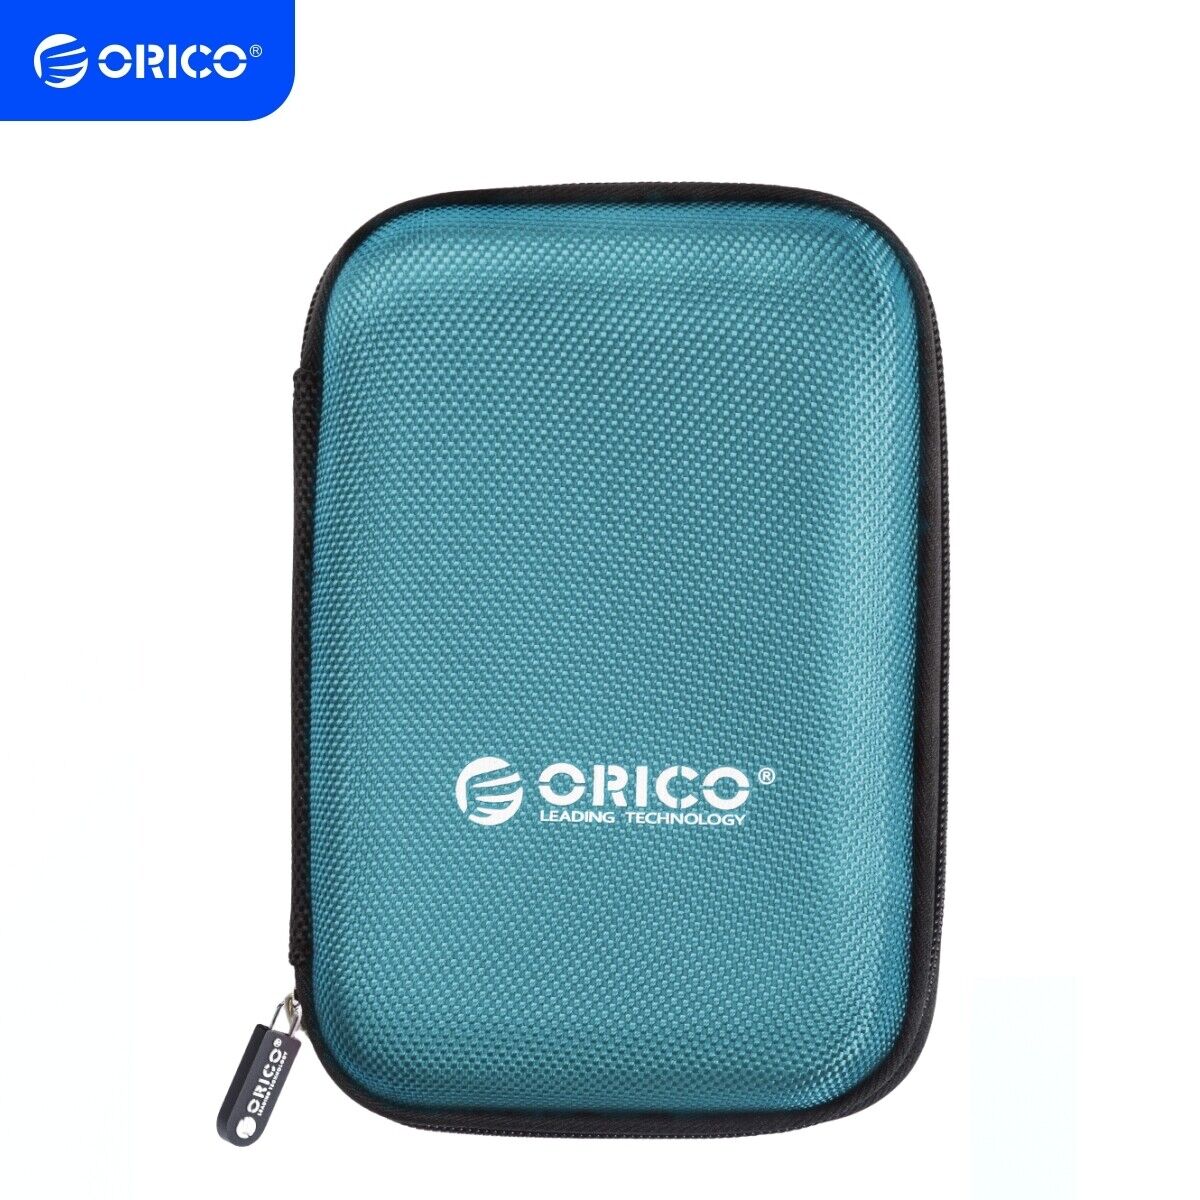 ORICO Hard Drive Case 2.5 in External Drive Storage Carrying Bag Waterproof Blue